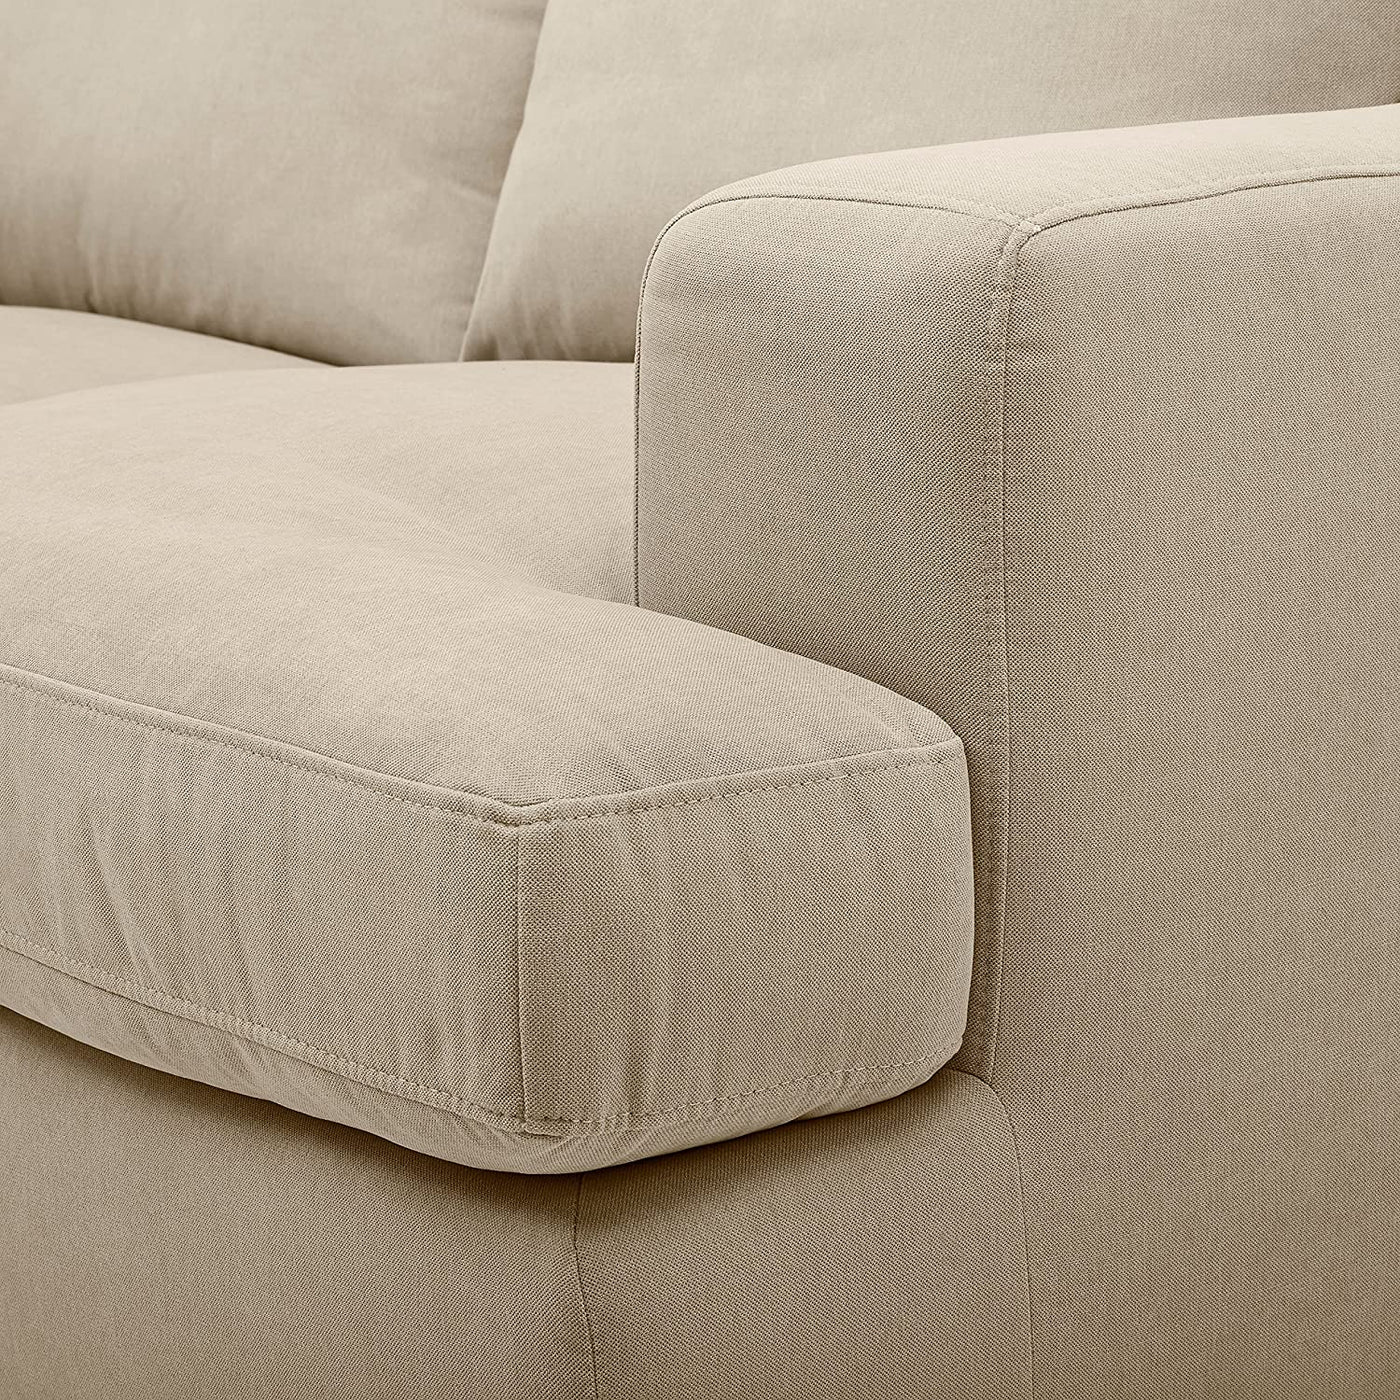 Stone & Beam Lauren Down-Filled Oversized Loveseat Sofa, 74"W, Fawn - $625